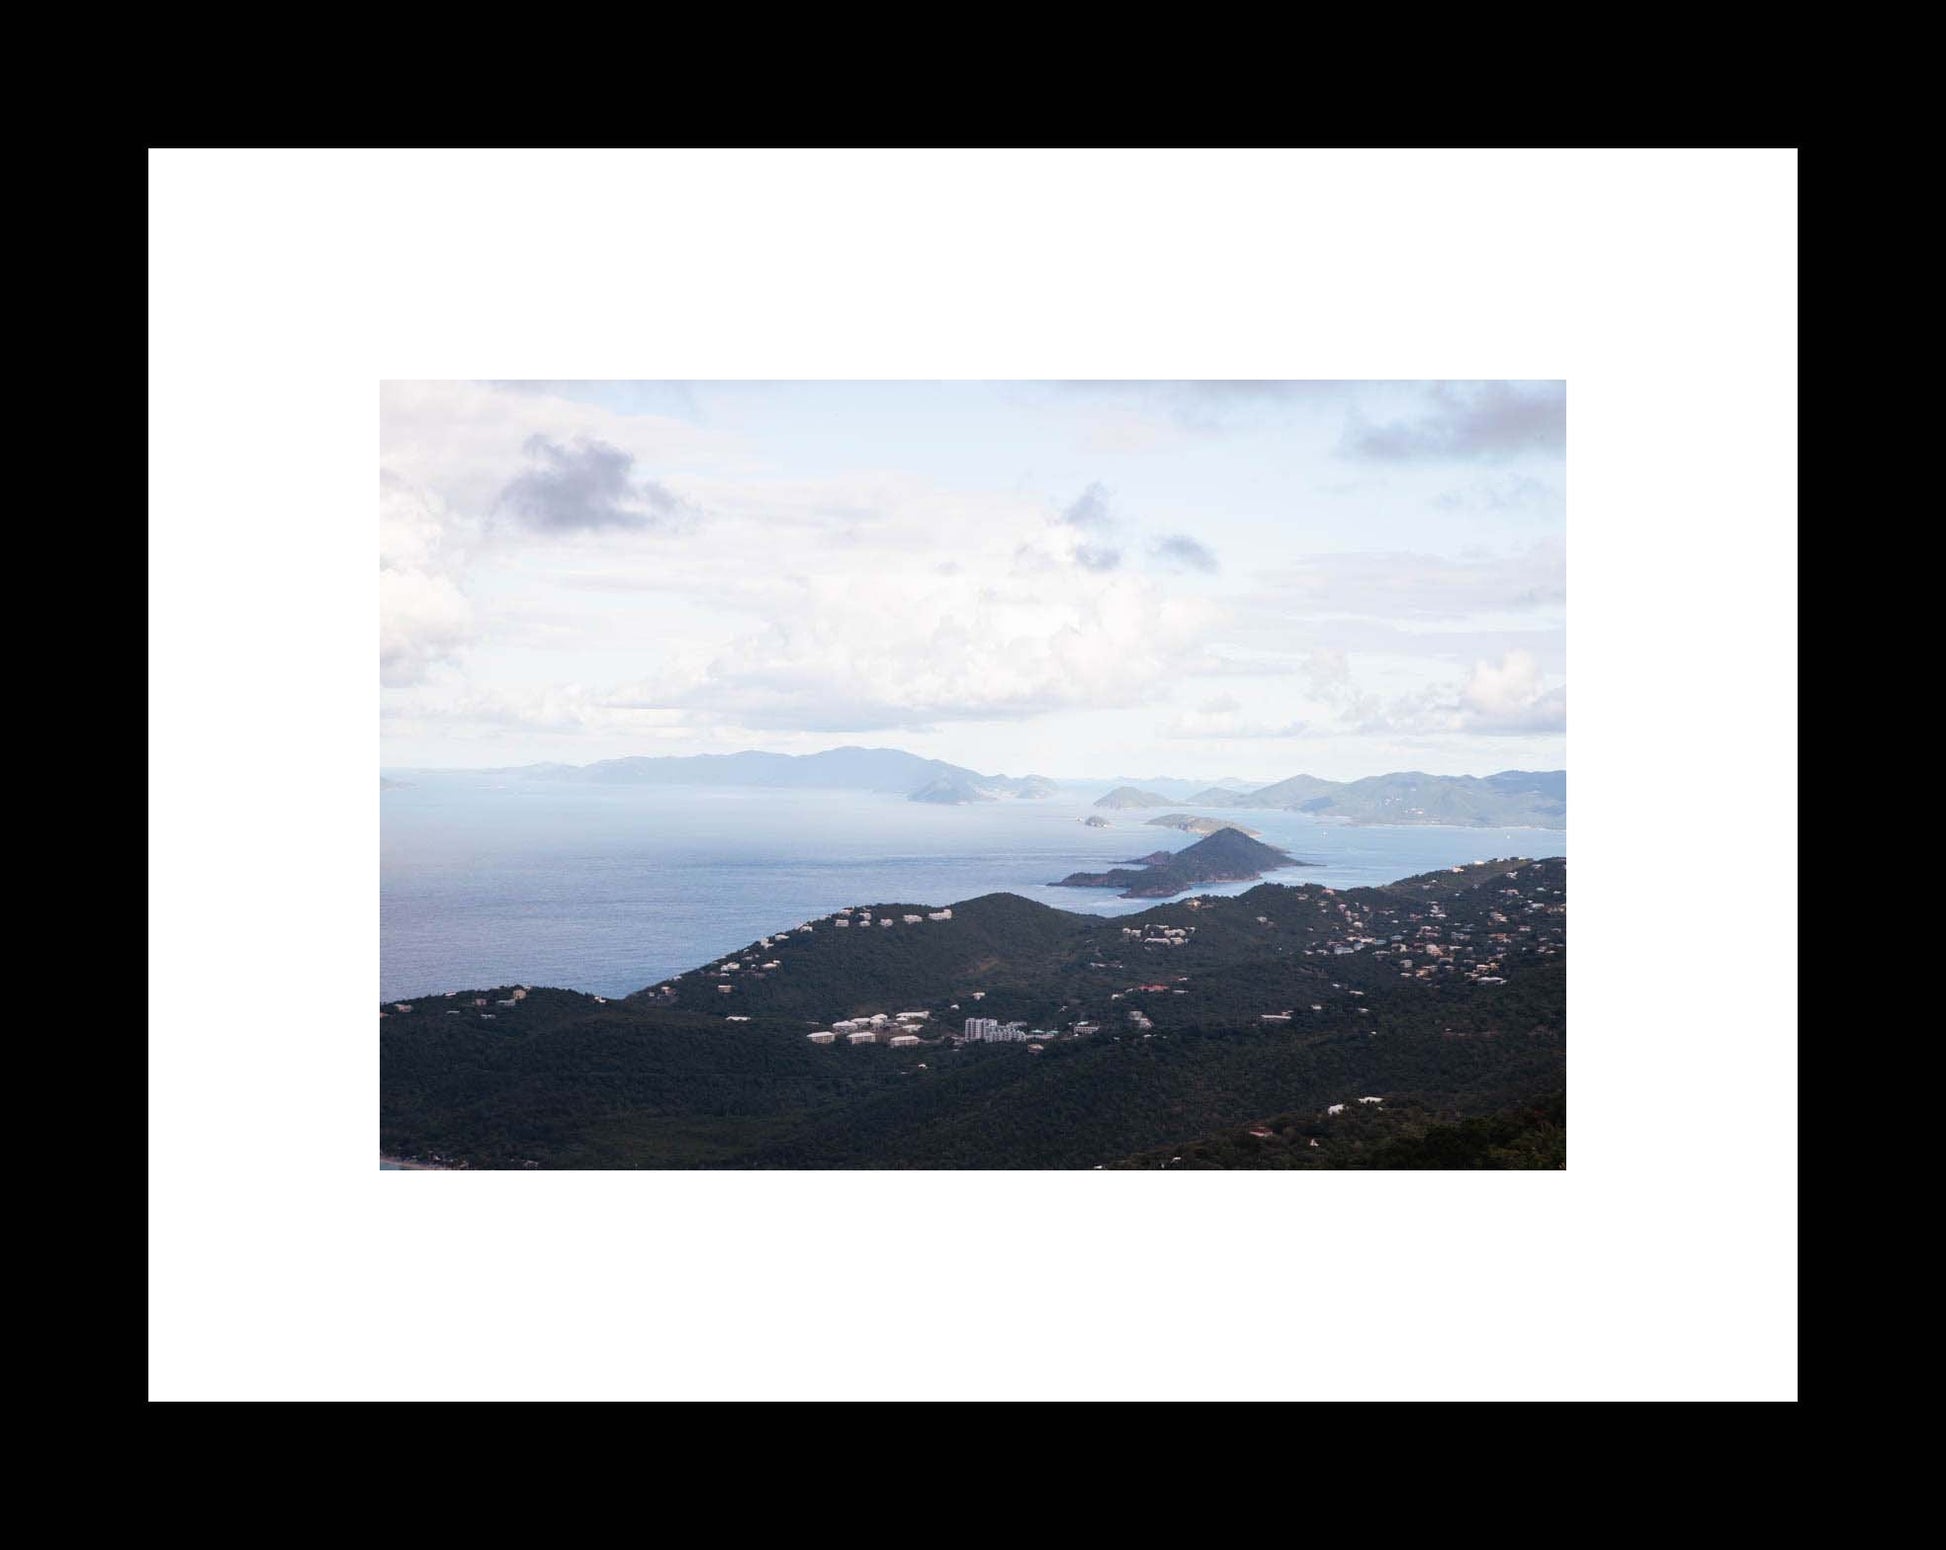 St Thomas US Virgin Islands Landscape Photography Print, Caribbean Beach, View From Mountain Top, Travel Wall Art, Canvas or Photo - eireanneilis